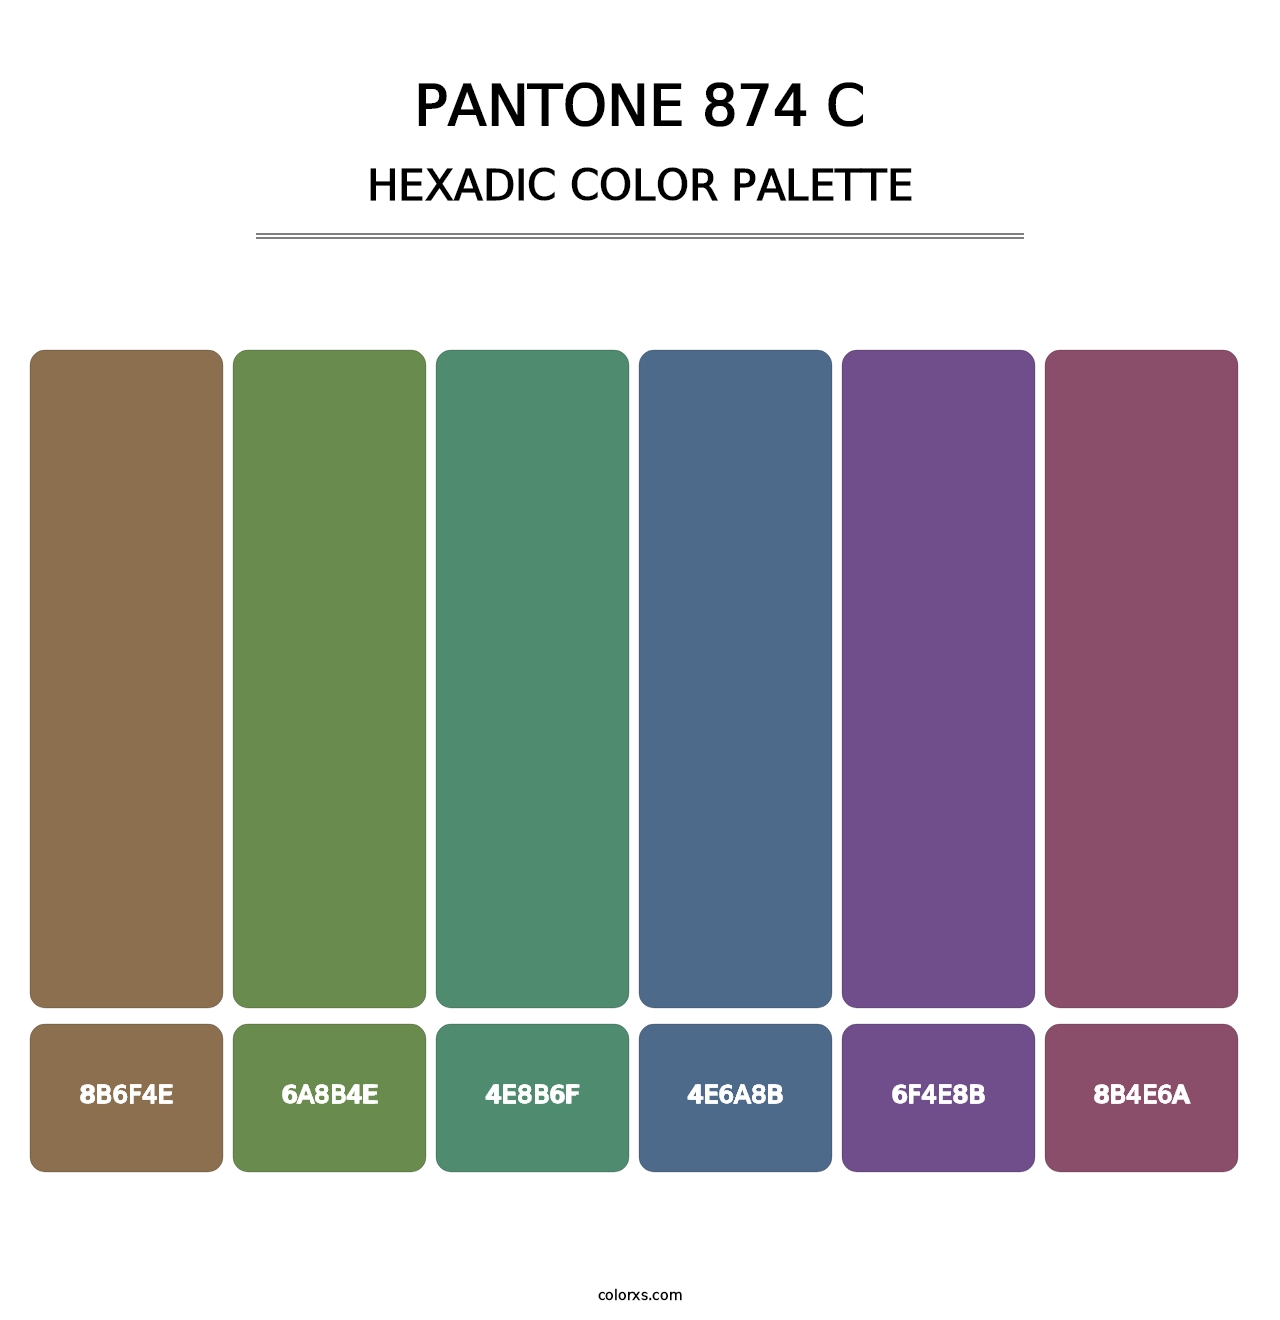 PANTONE 874 C - Hexadic Color Palette